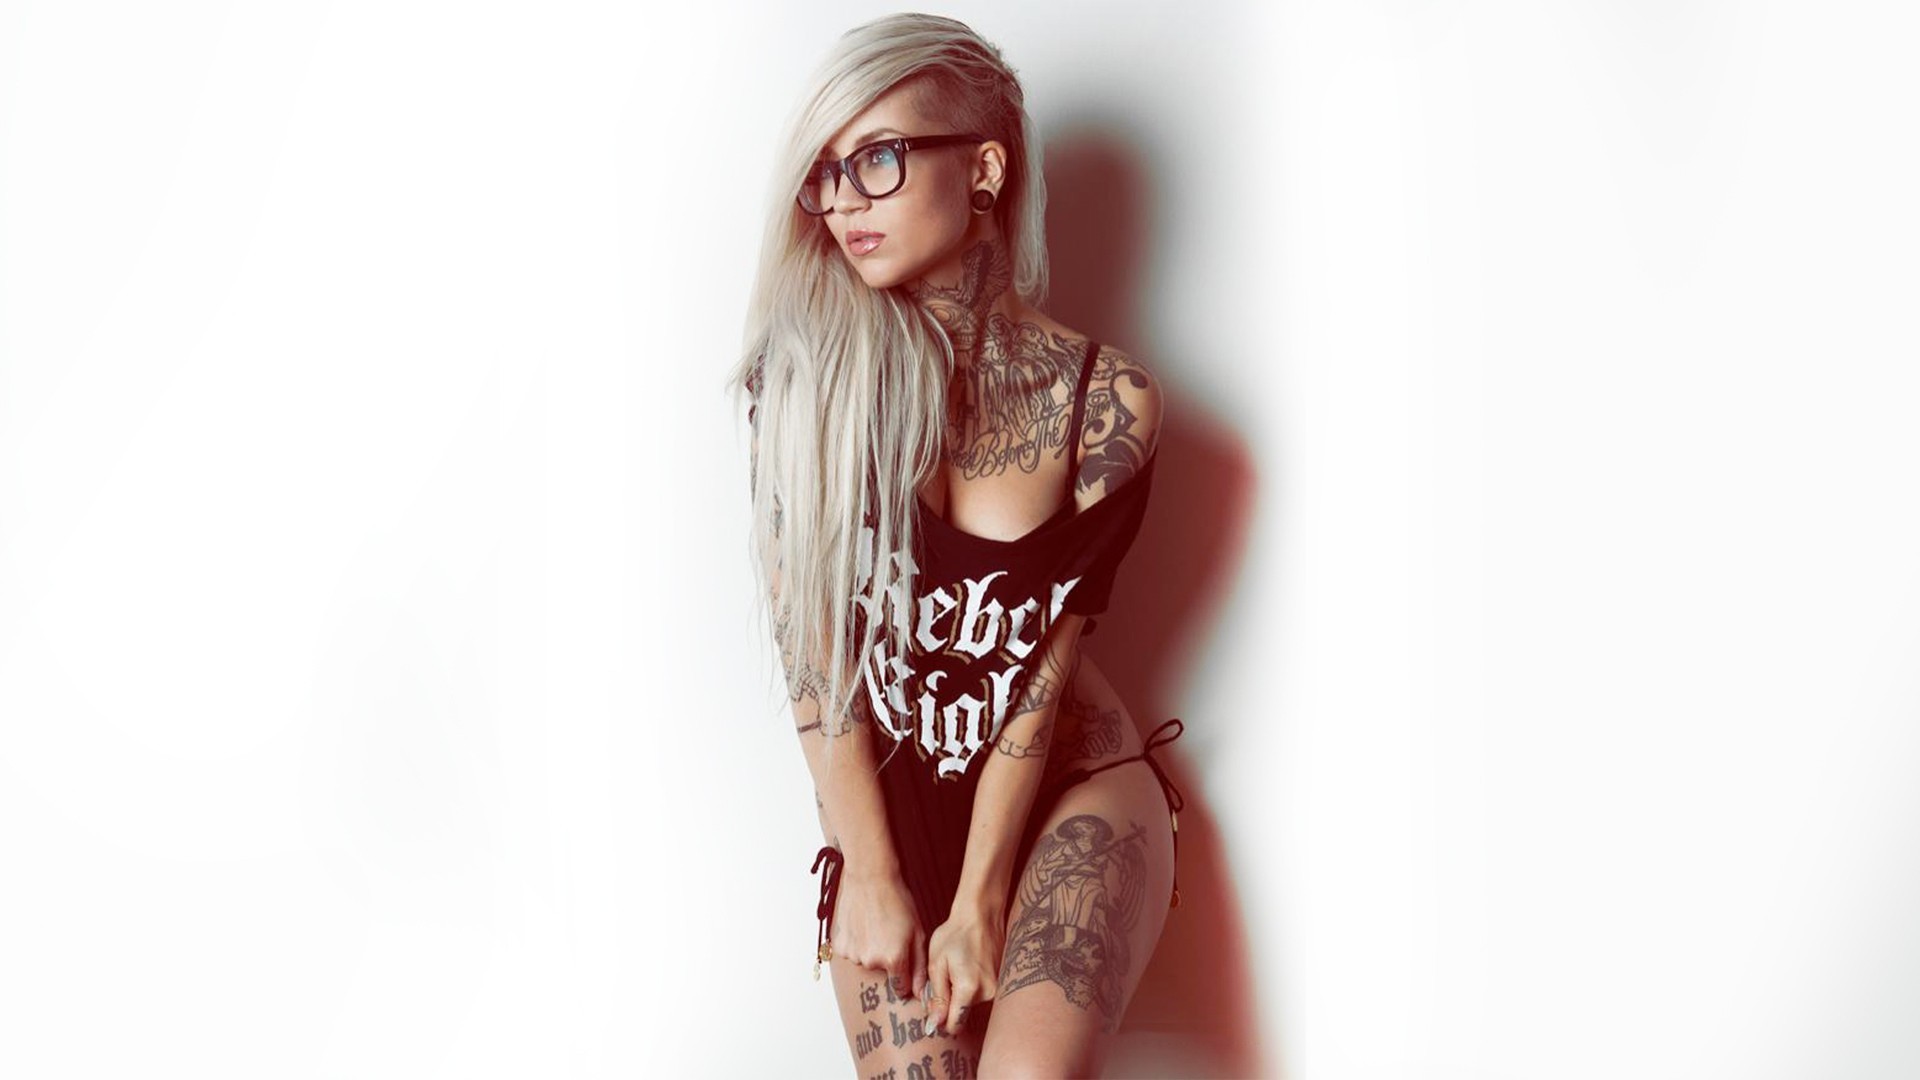 tattoo girl wallpaper,hair,shoulder,fashion model,beauty,long hair